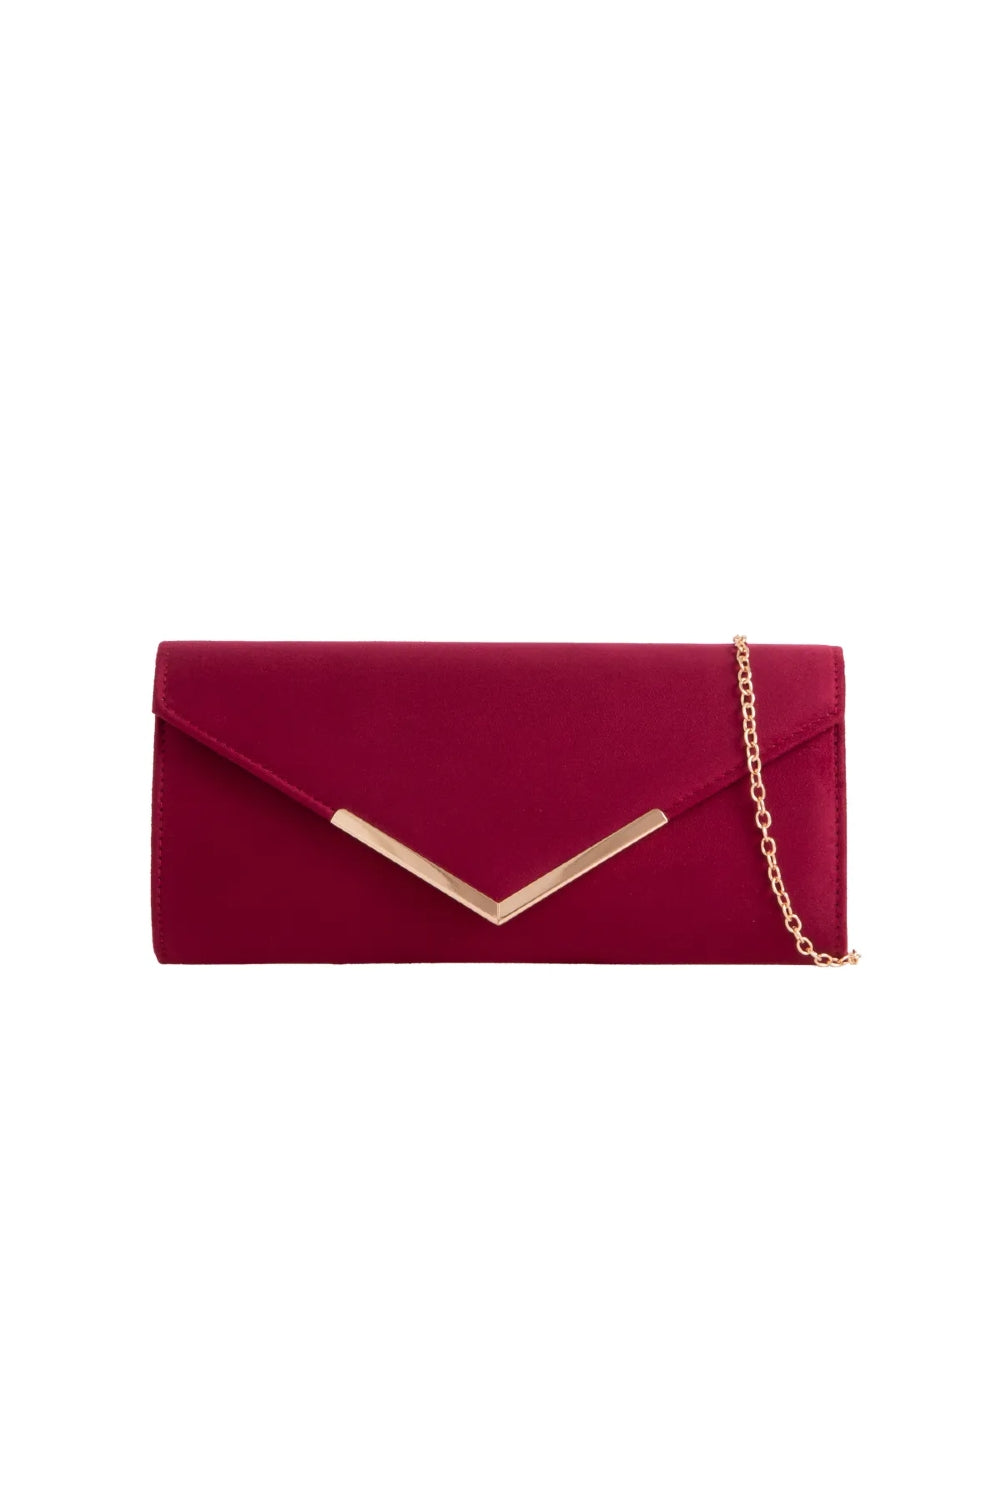 Burgundy Suede Envelope Clutch Bag - Aftershock London